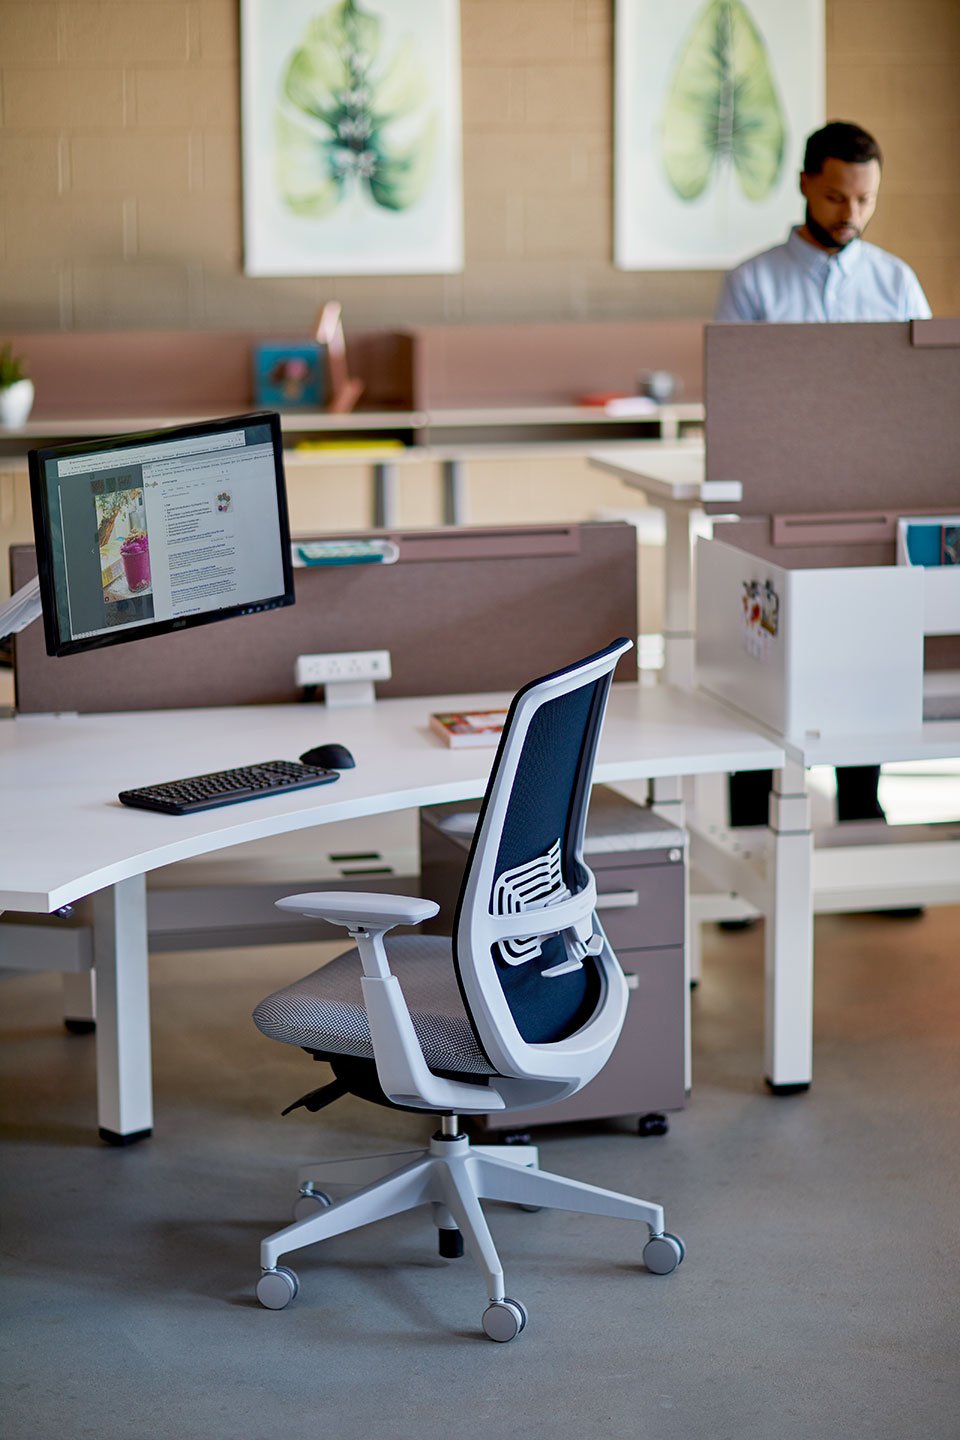 Haworth Belong Screen in brown on office desk with employee working